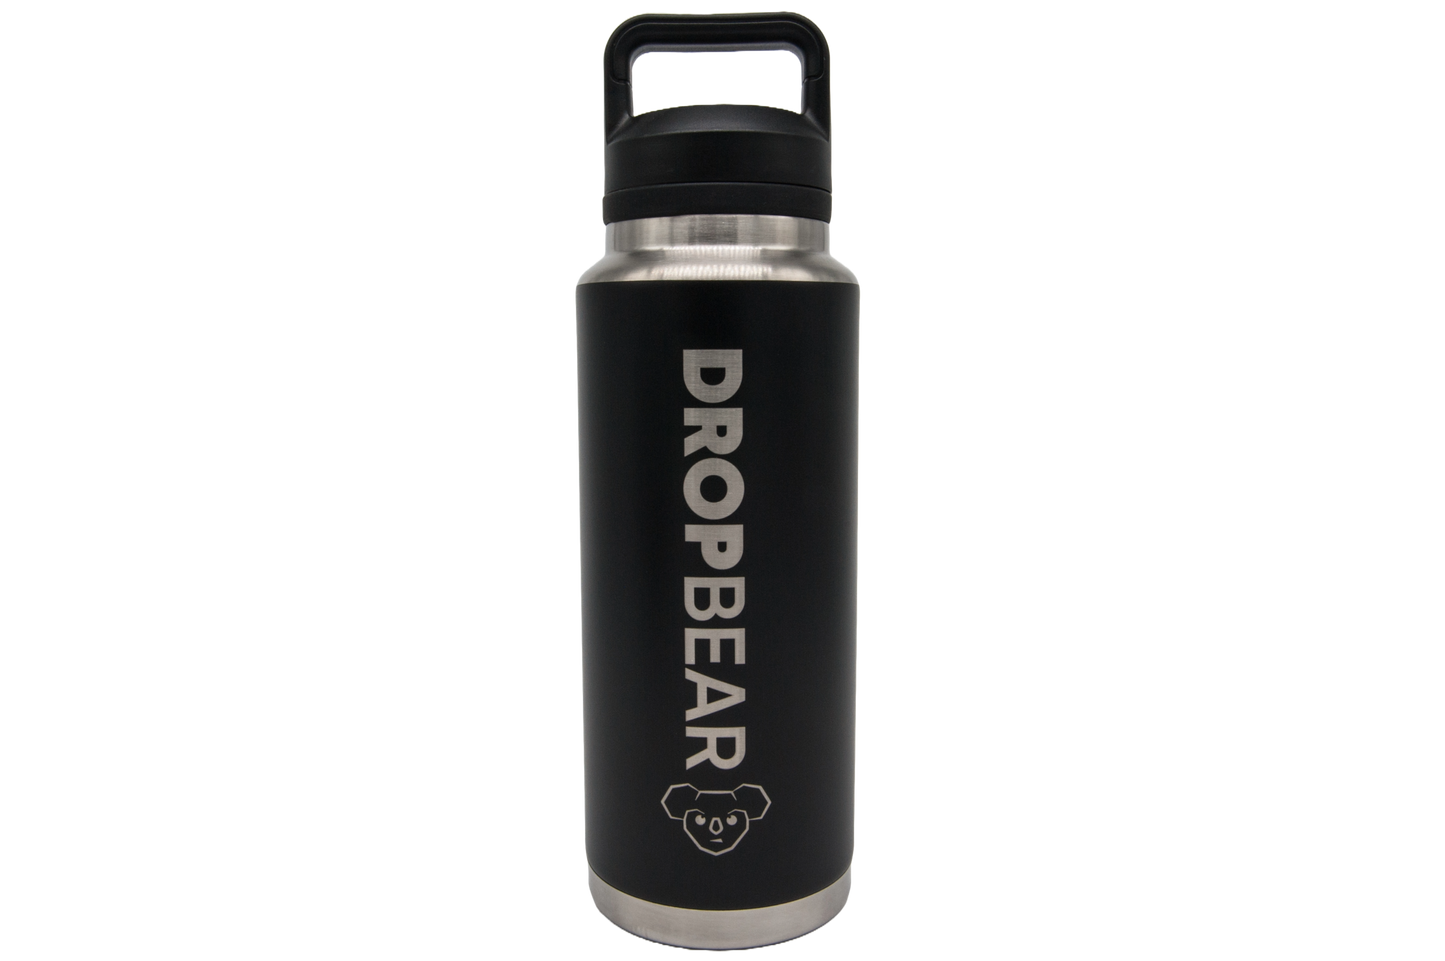 DROPBEAR - 800ml & 1100ml bottles - 🇦🇺 AVAILABLE NOW🐨